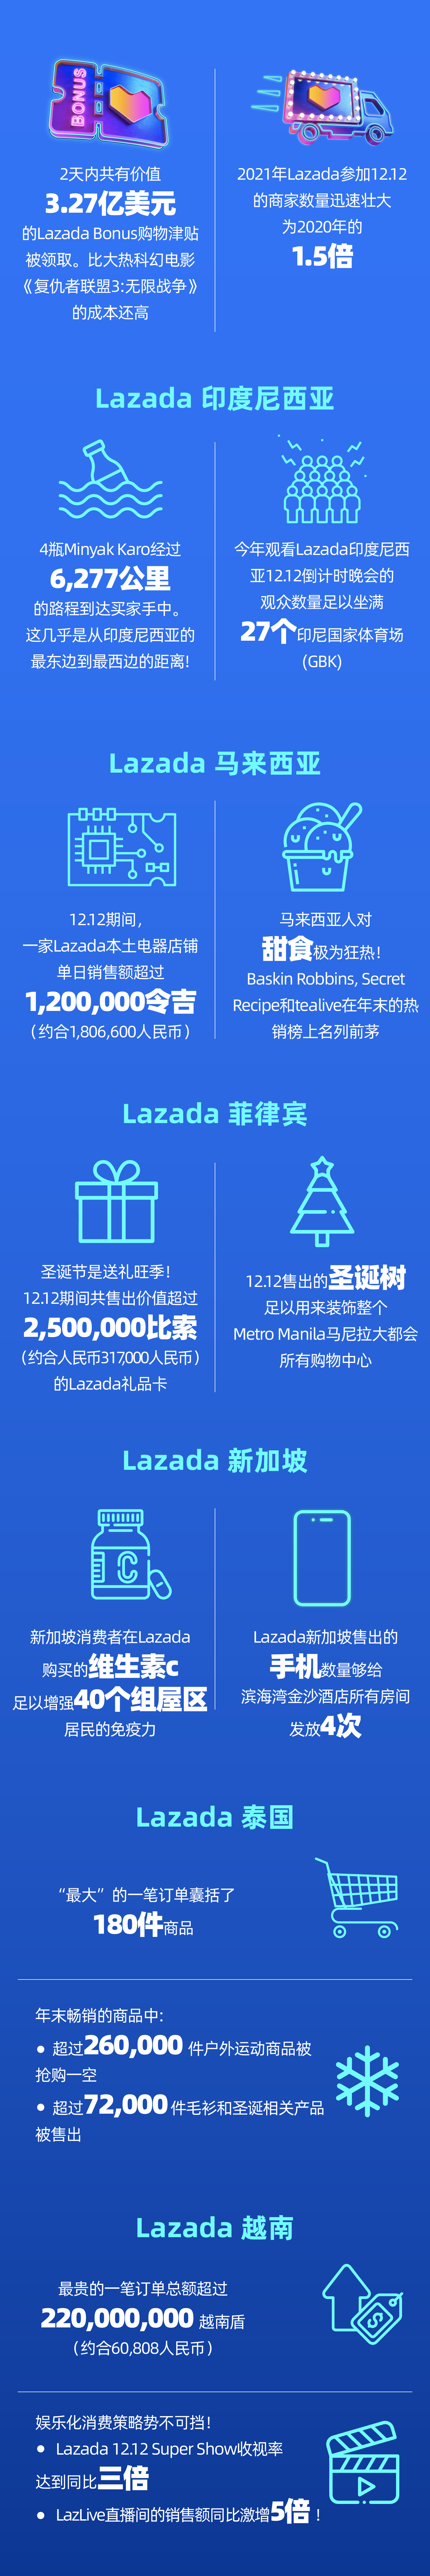 Cross border e-commerce platform Lazada 12.12's most comprehensive battle report, just read this one!